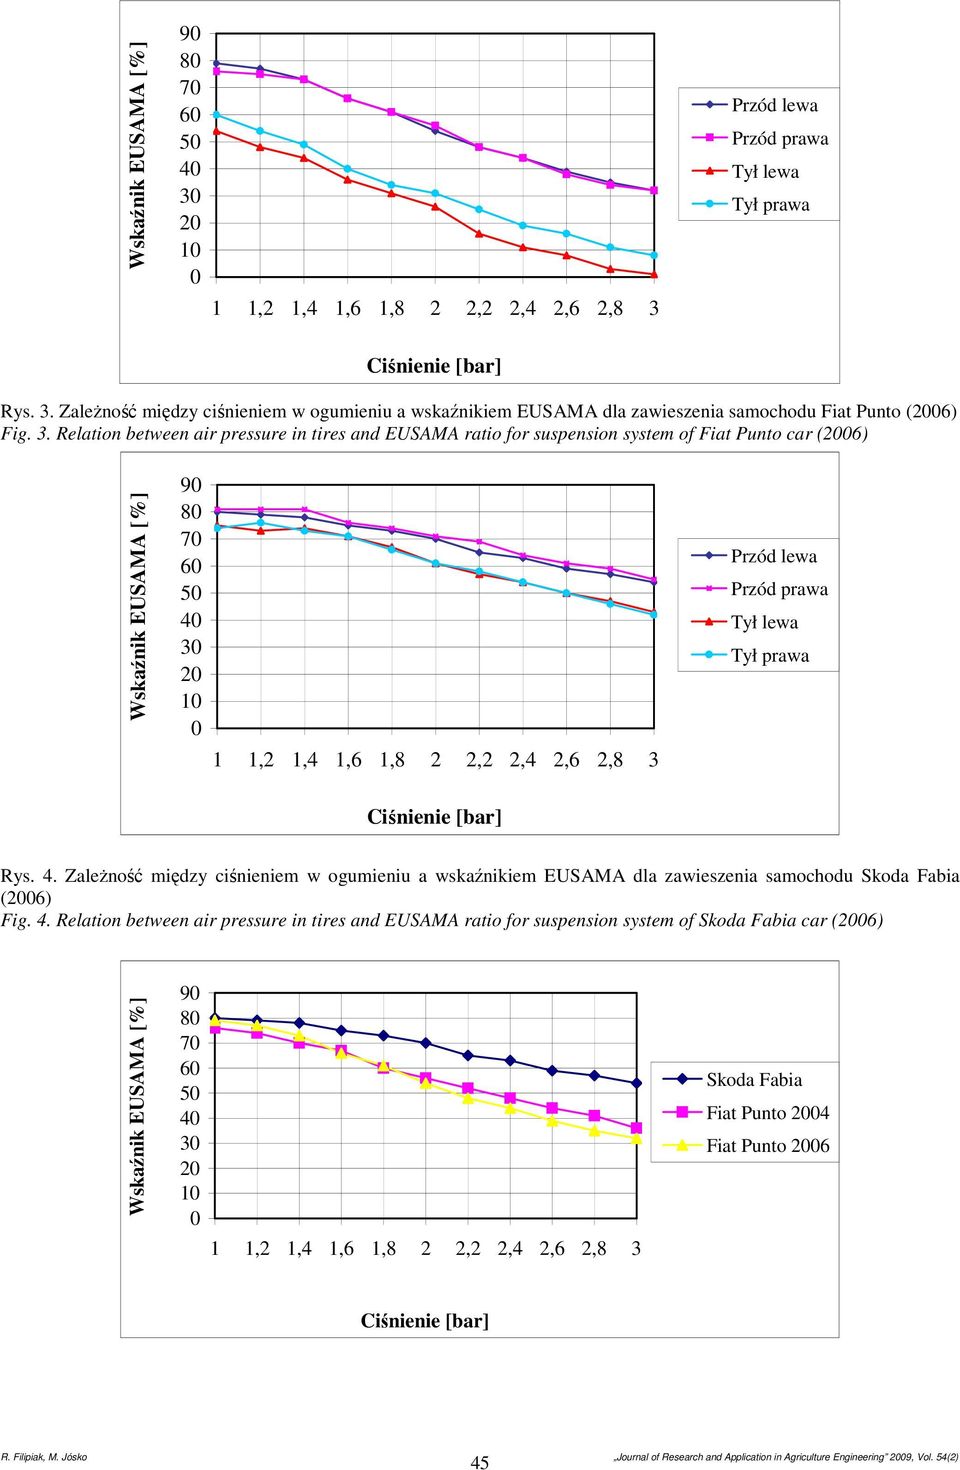 Relation between air pressure in tires and EUSAMA ratio for suspension system of Fiat Punto car (6) Przód lewa Przód prawa Tył lewa